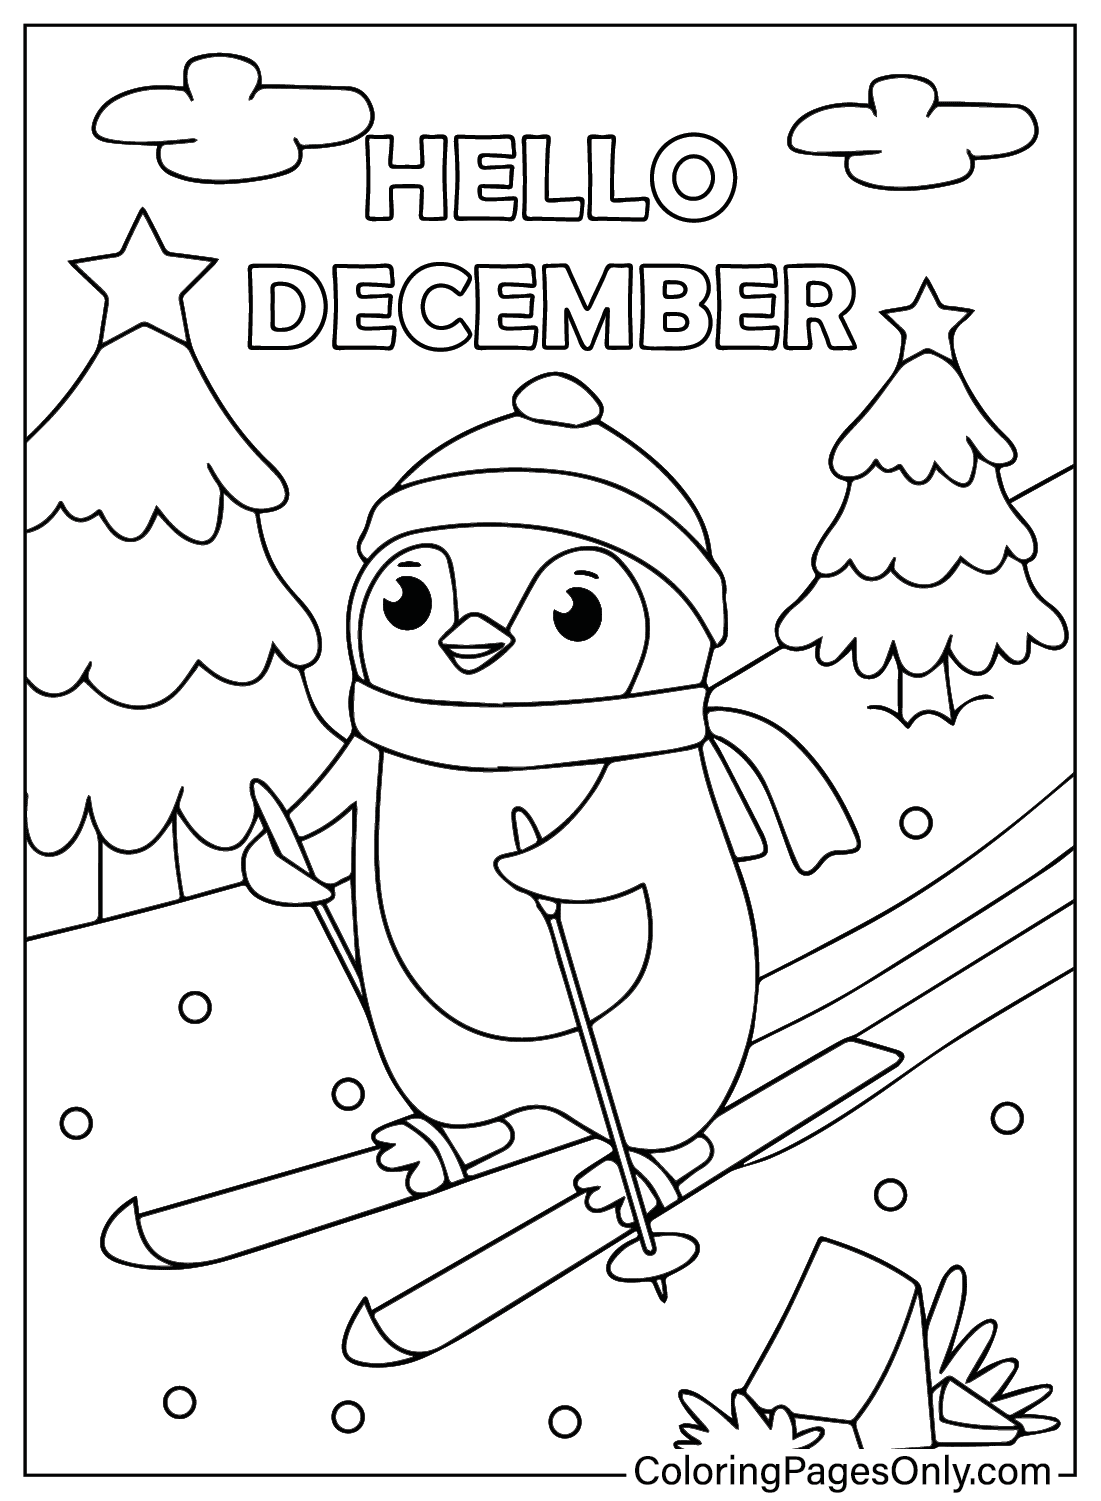 December pinguïn kleurplaat van Penguin